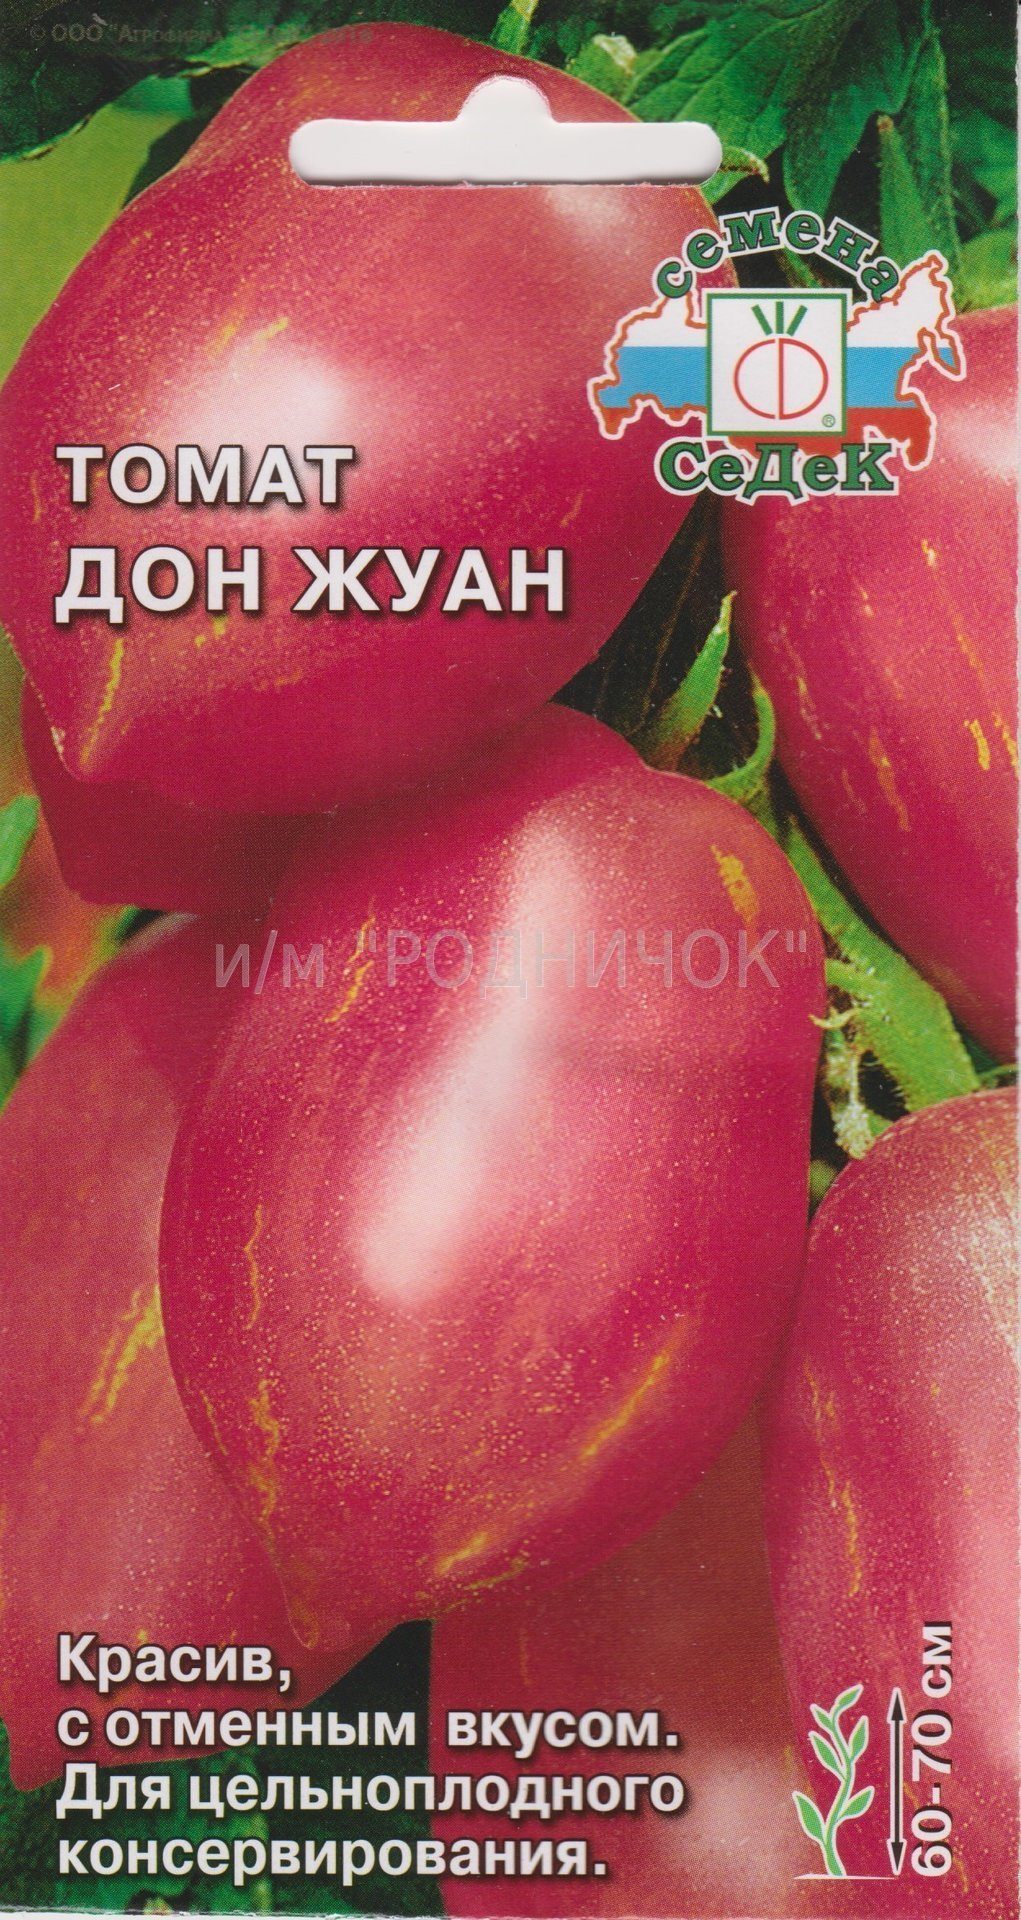 Описание томата Дон Жуан, его характеристика и особенности выращивания